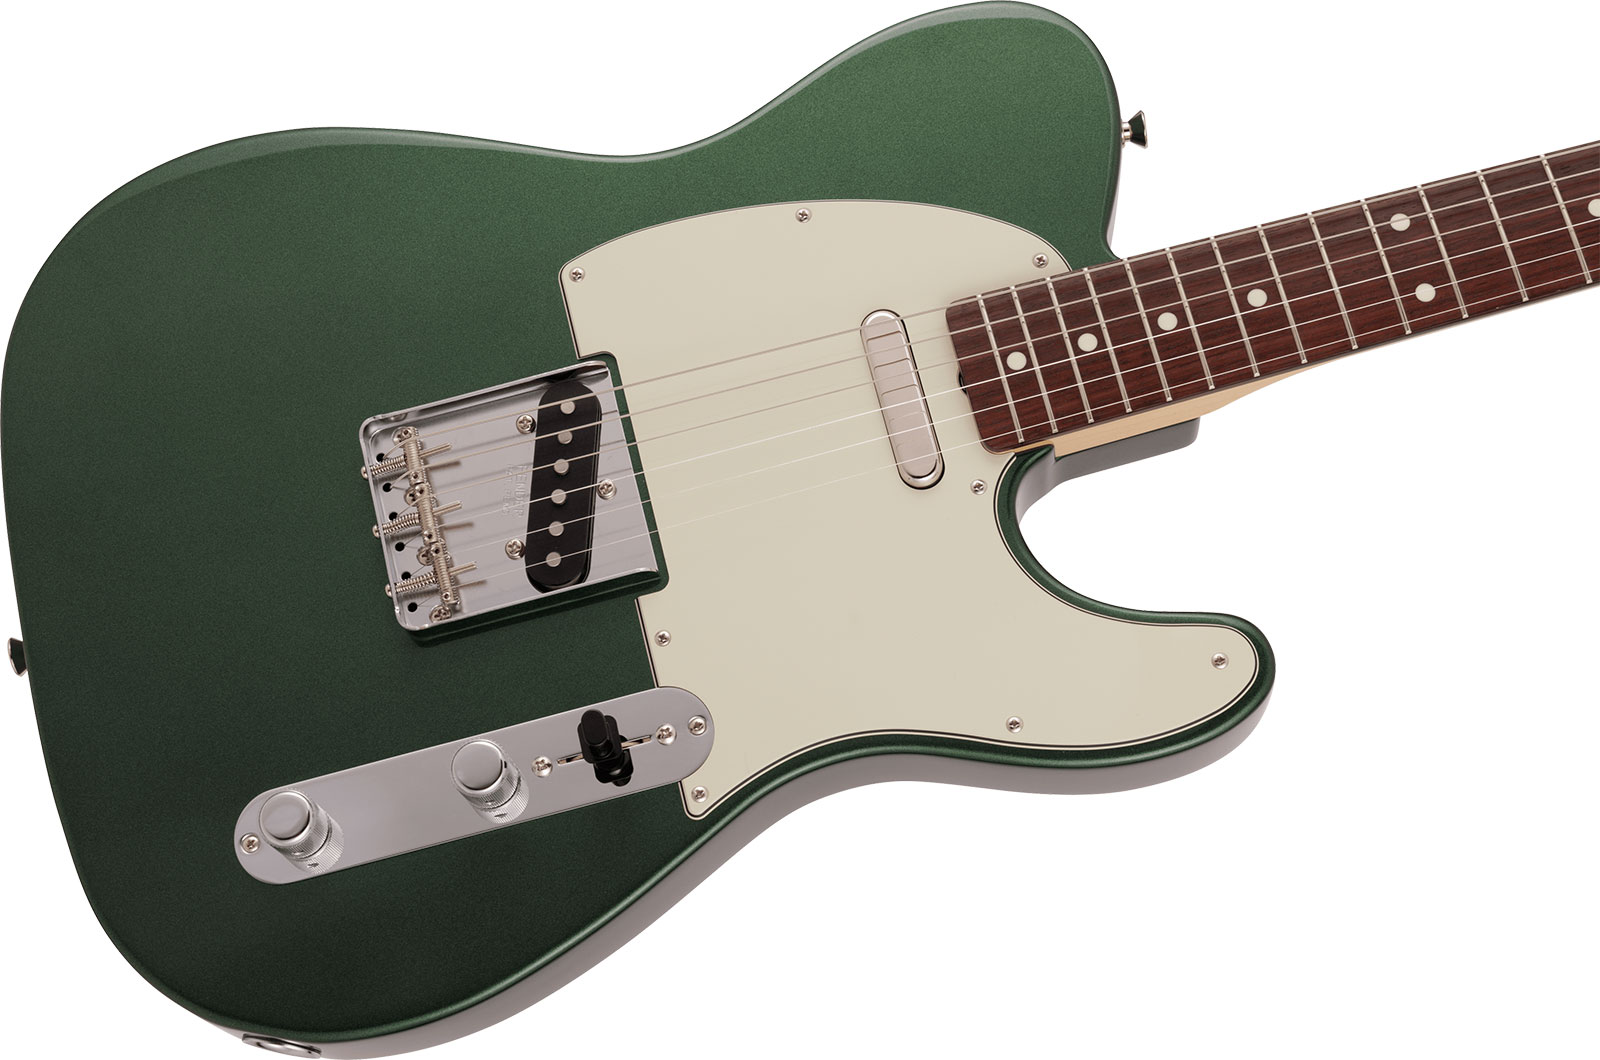 Fender Tele Traditional 60s Mij 2s Ht Rw - Aged Sherwood Green Metallic - Tel shape electric guitar - Variation 2